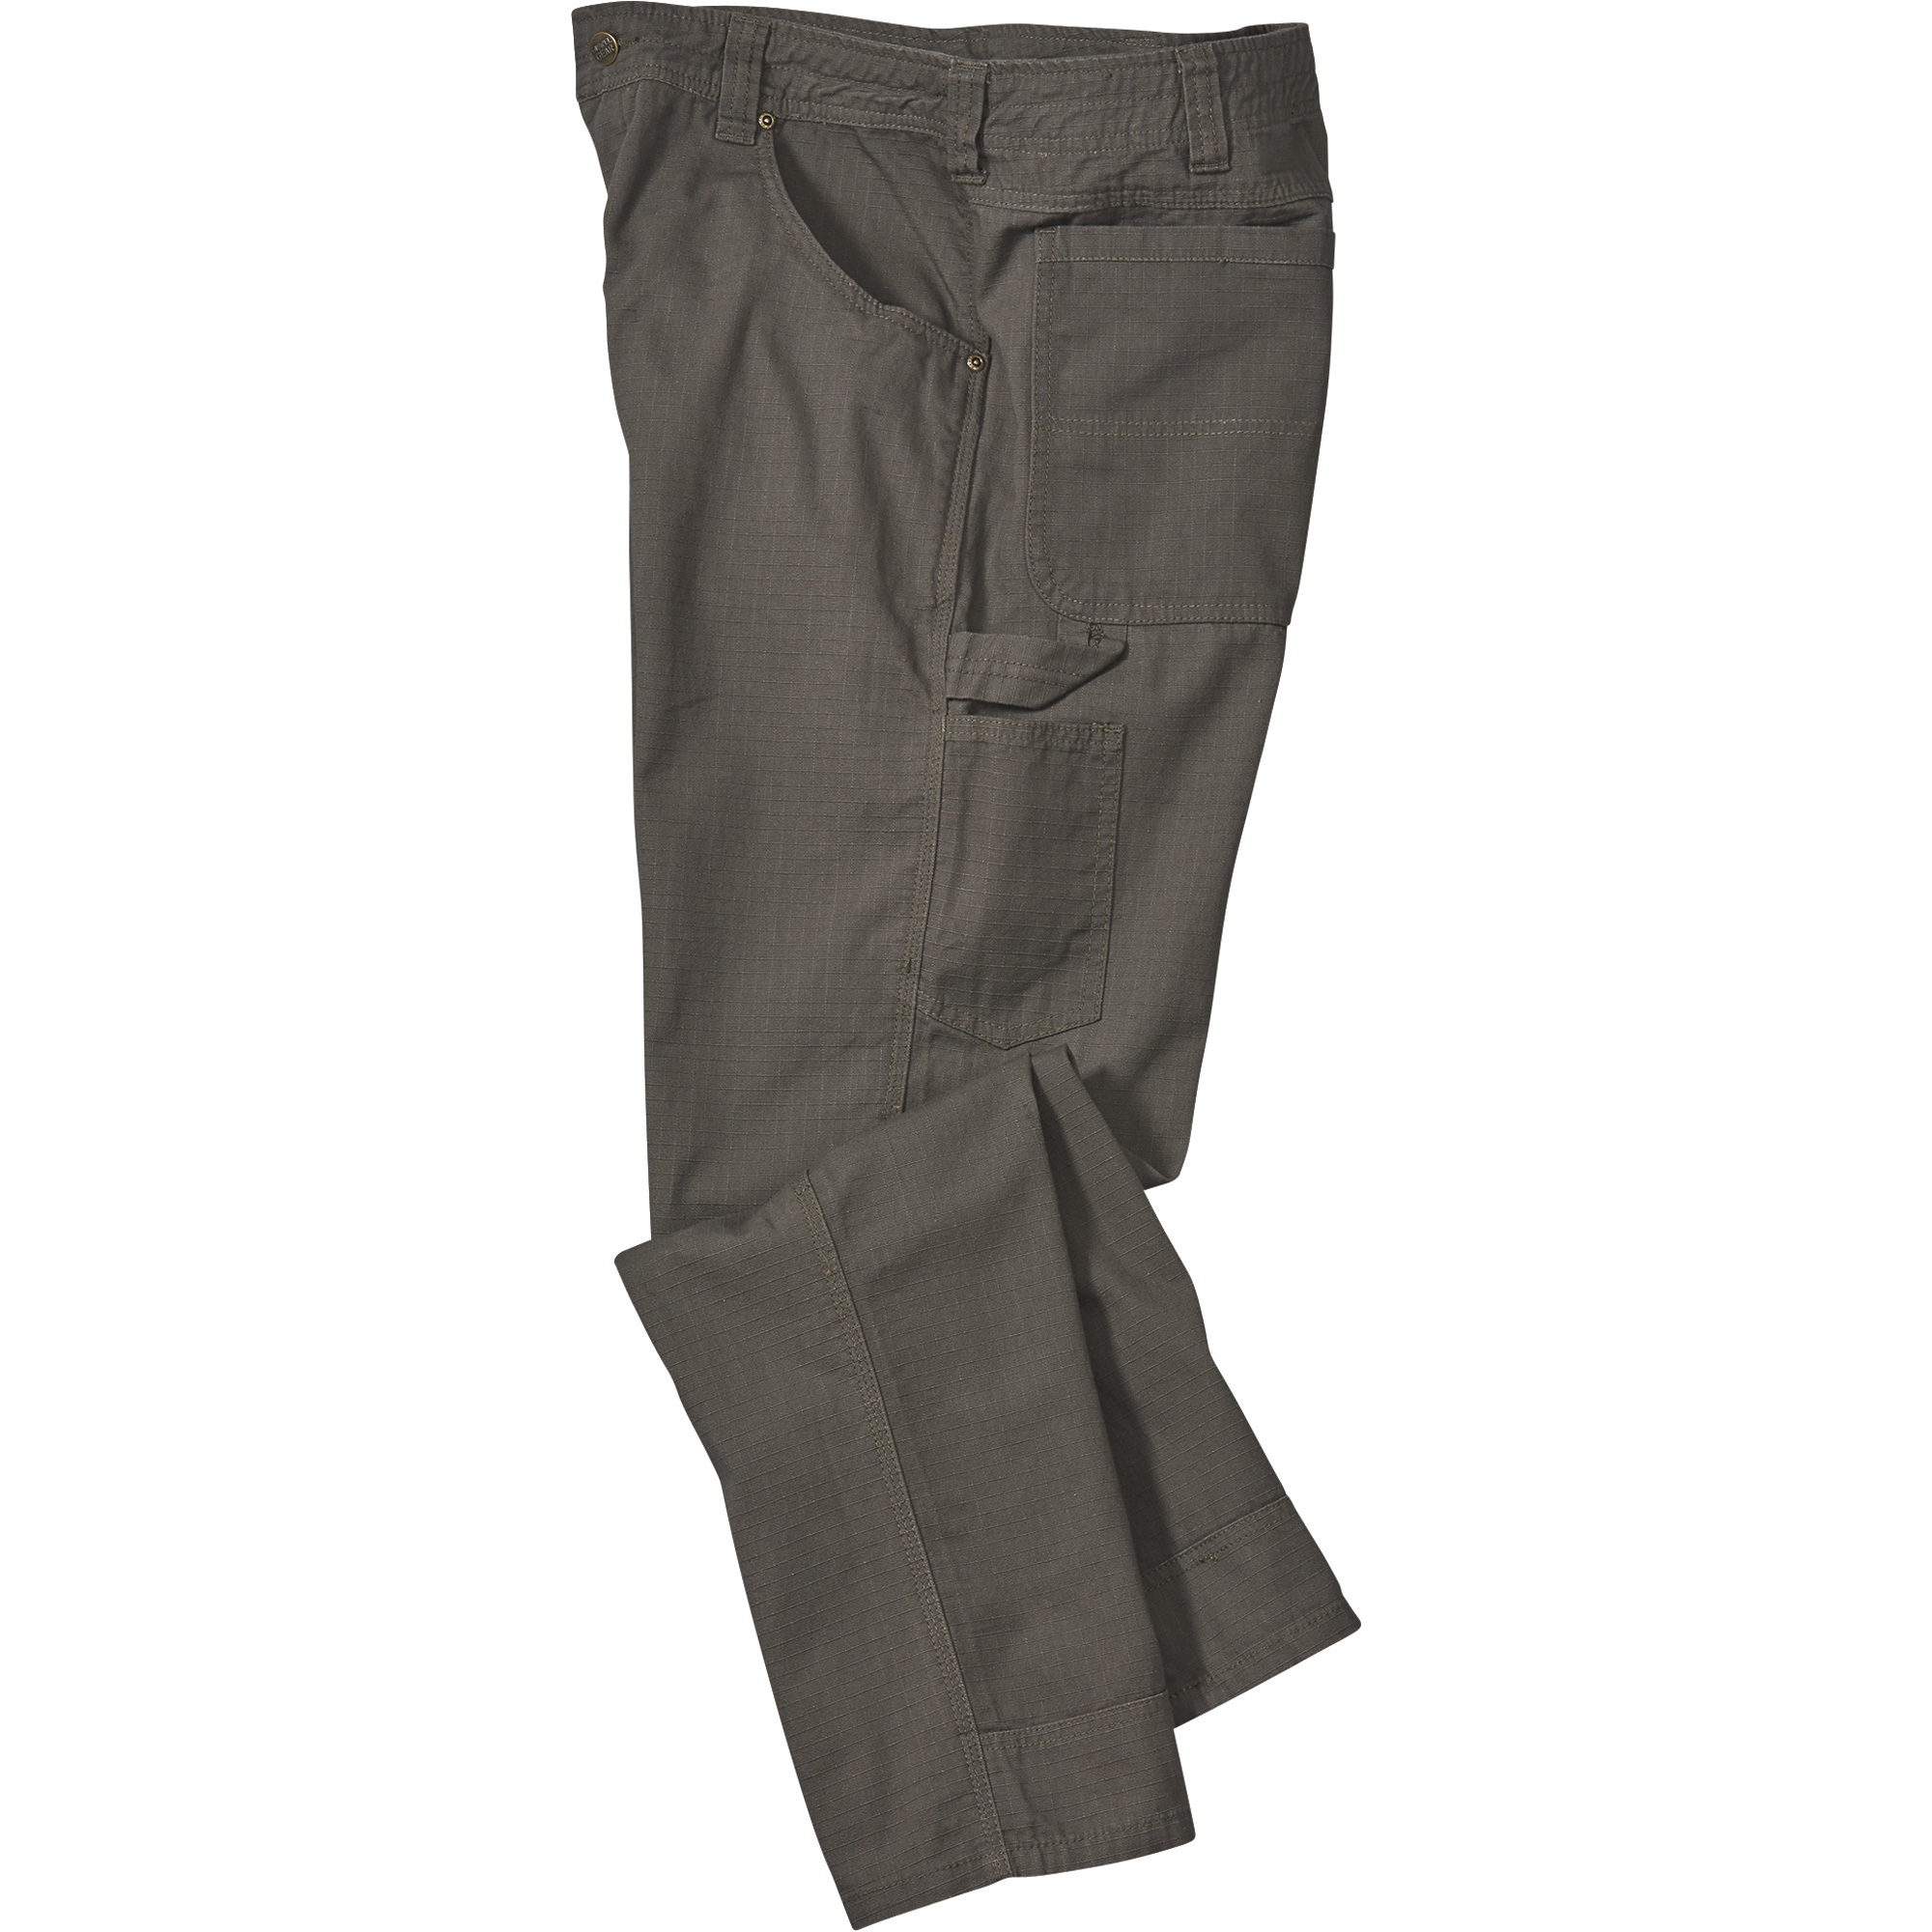 Gravel Gear Men's Cotton Ripstop Carpenter Pants with Teflon Fabric Protector â Moss, 42Inch Waist x 32Inch Inseam